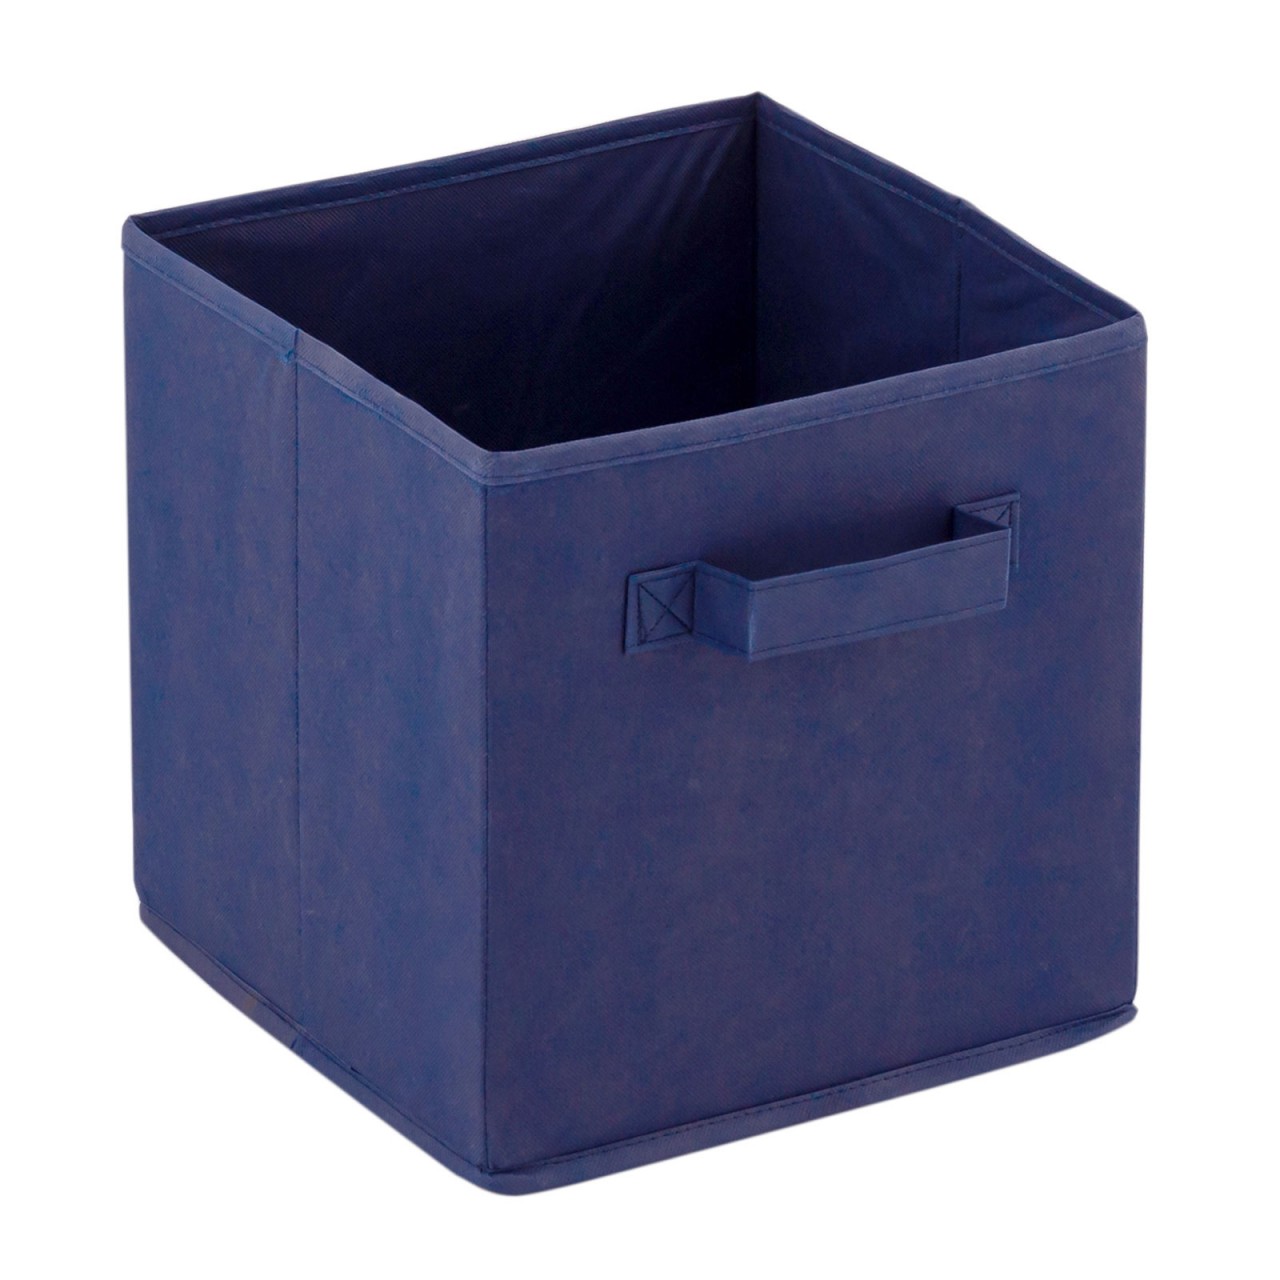 Aufbewahrungsboxen faltbar Faltbox 26x26x26 cm 6er Pack Aufbewahrungskiste quadratisch